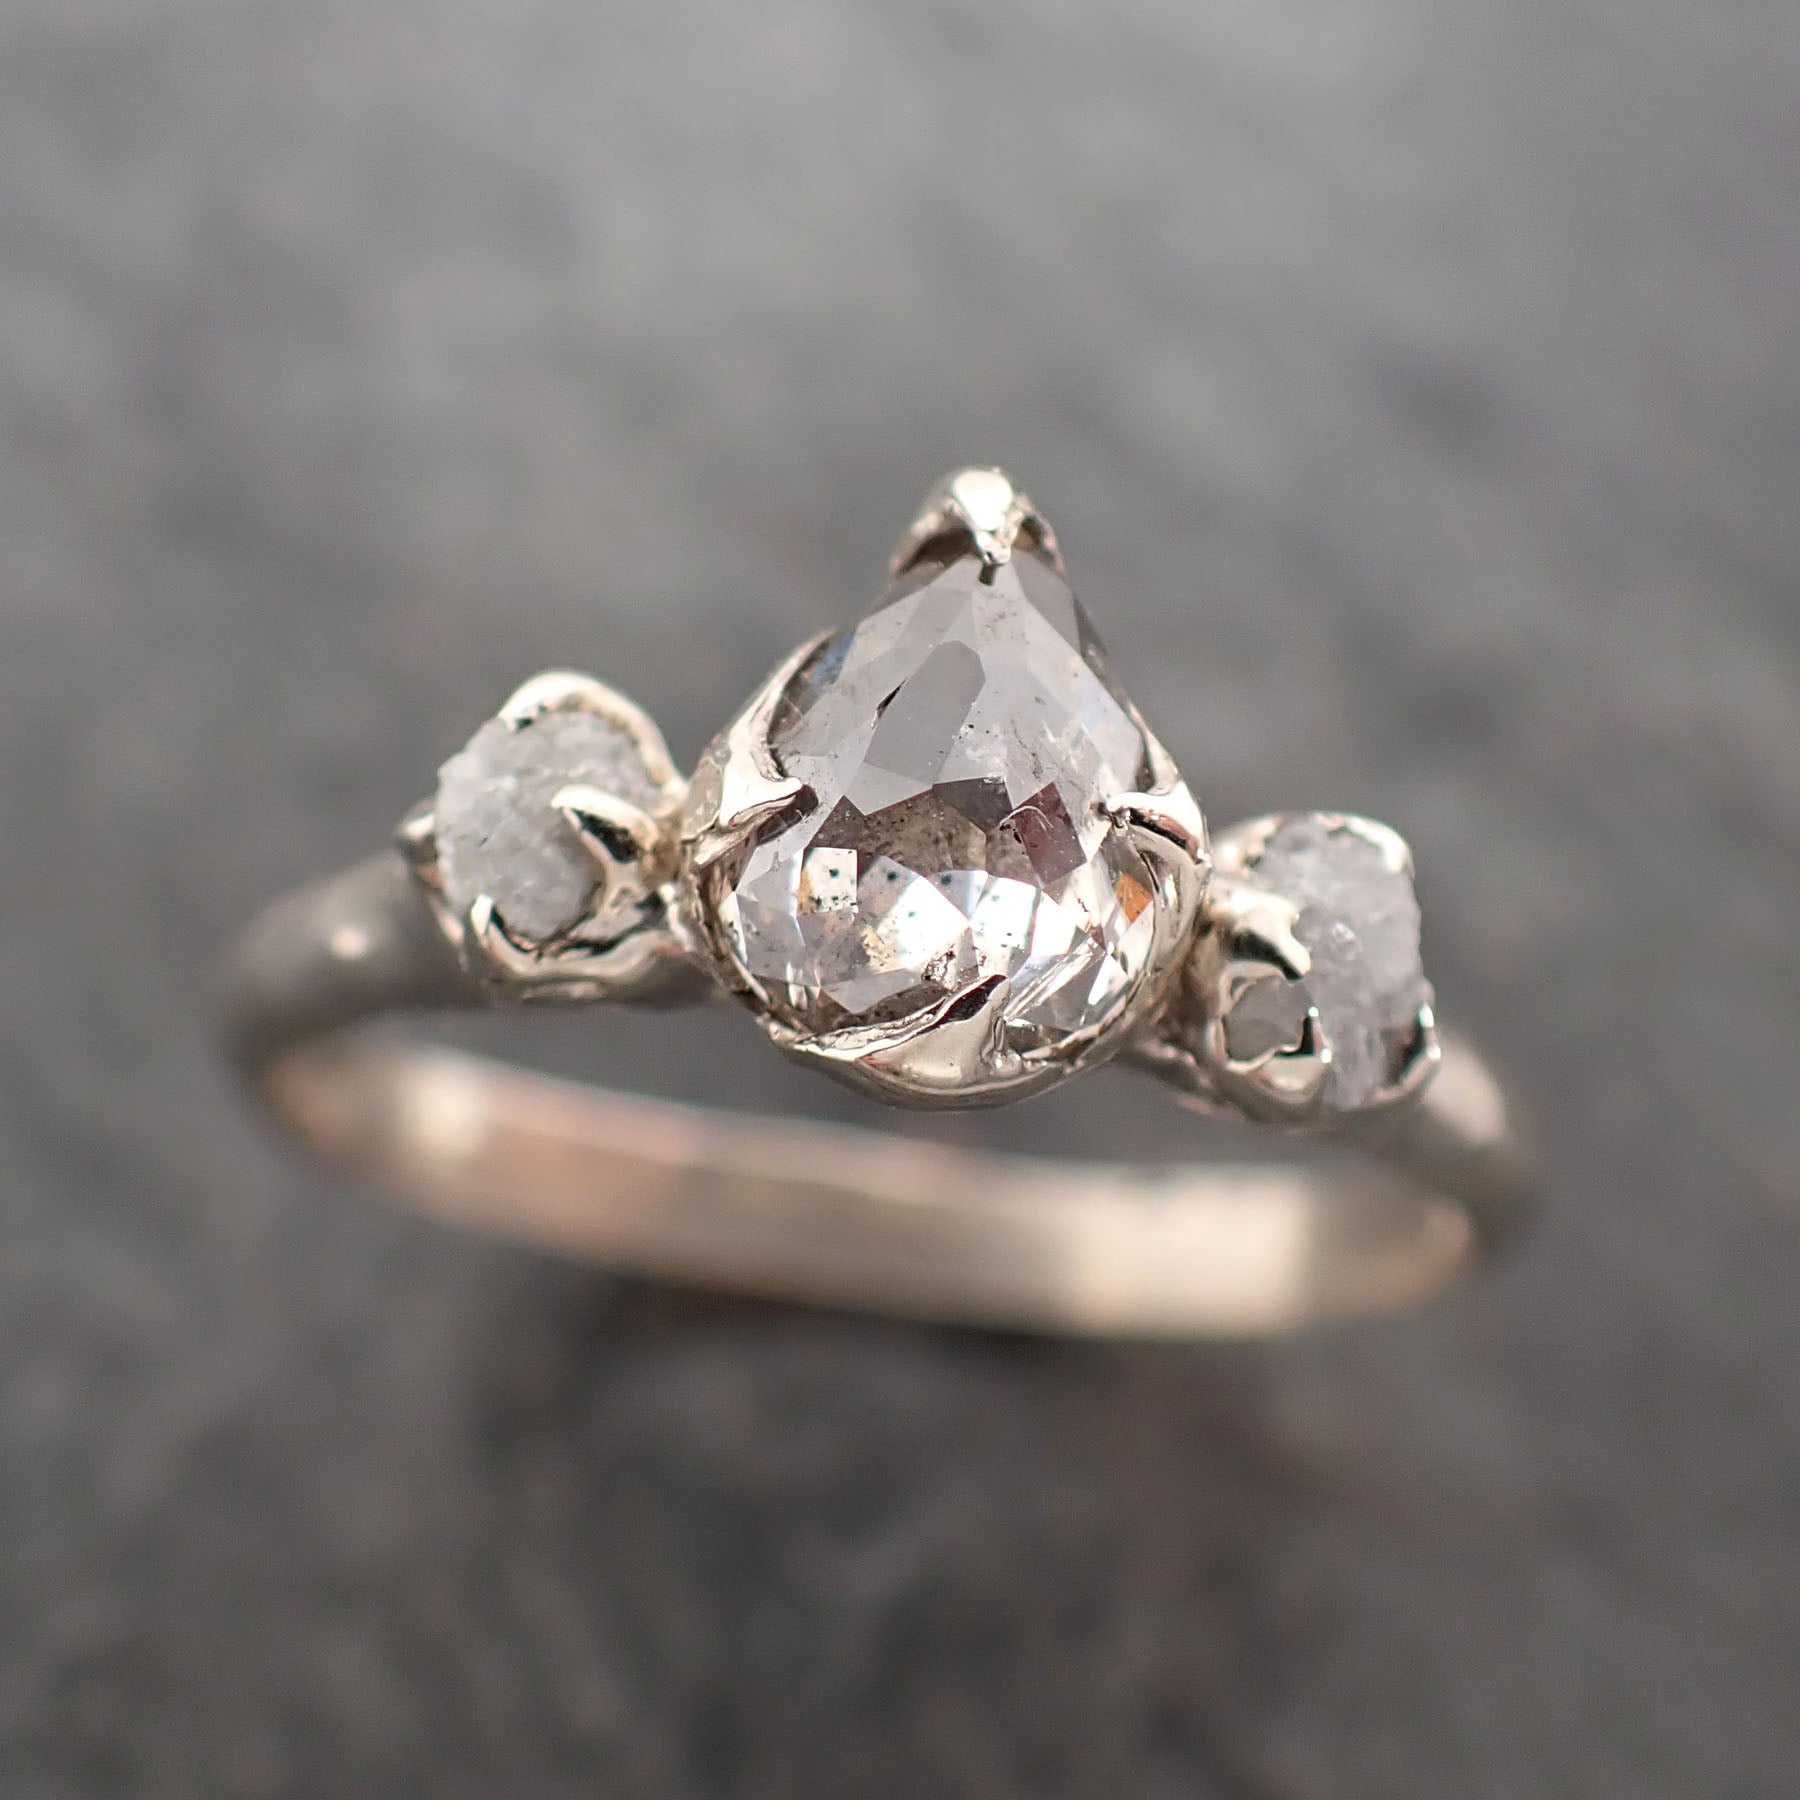 faceted fancy cut champagne diamond engagement 14k white gold multi stone wedding ring rough diamond ring byangeline 2385 Alternative Engagement